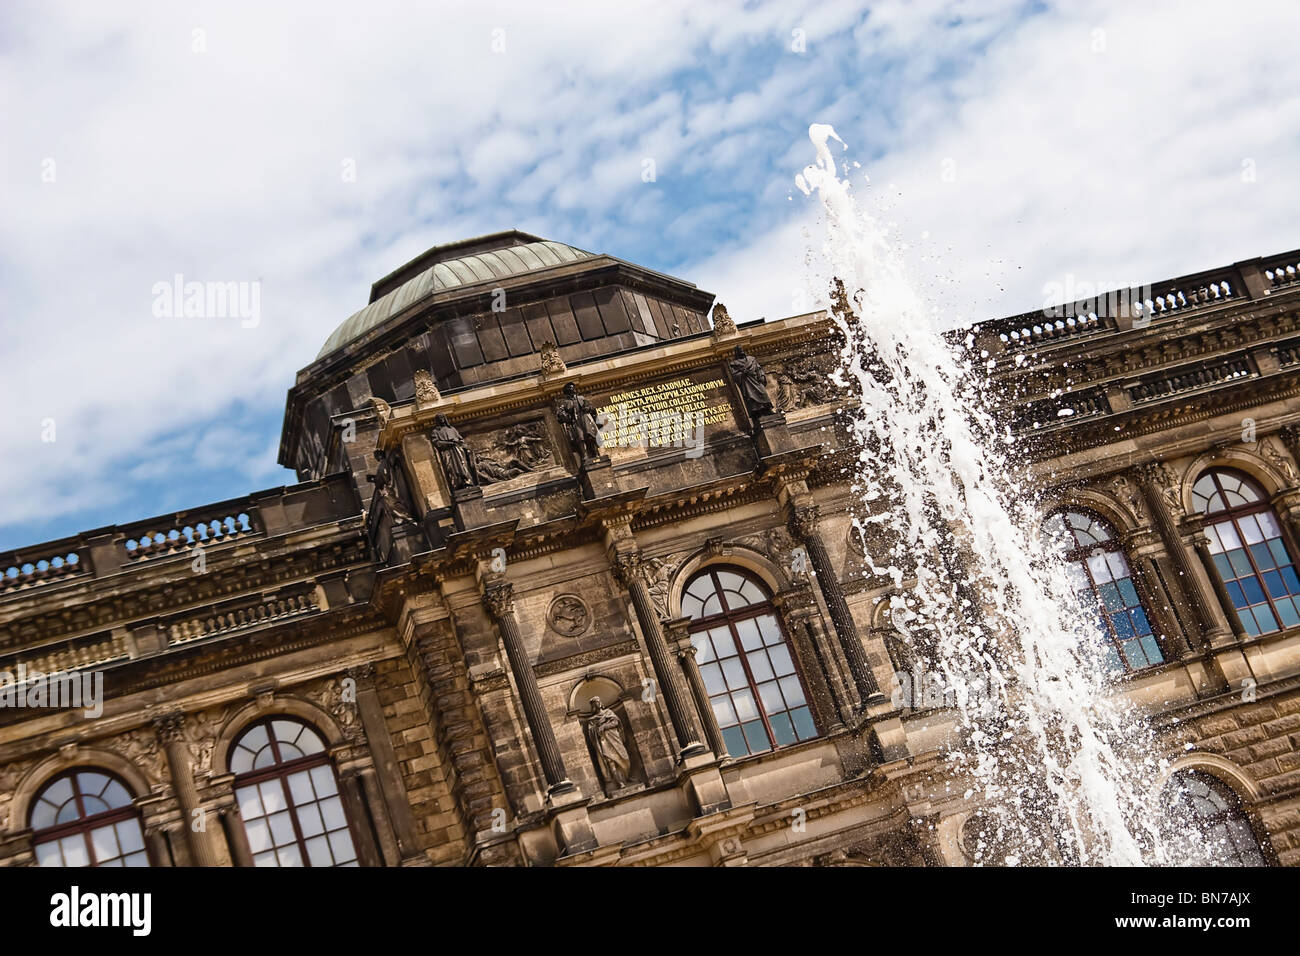 Das historische barocke Zwinger Palace Museum in Dresden, Deutschland Stockfoto